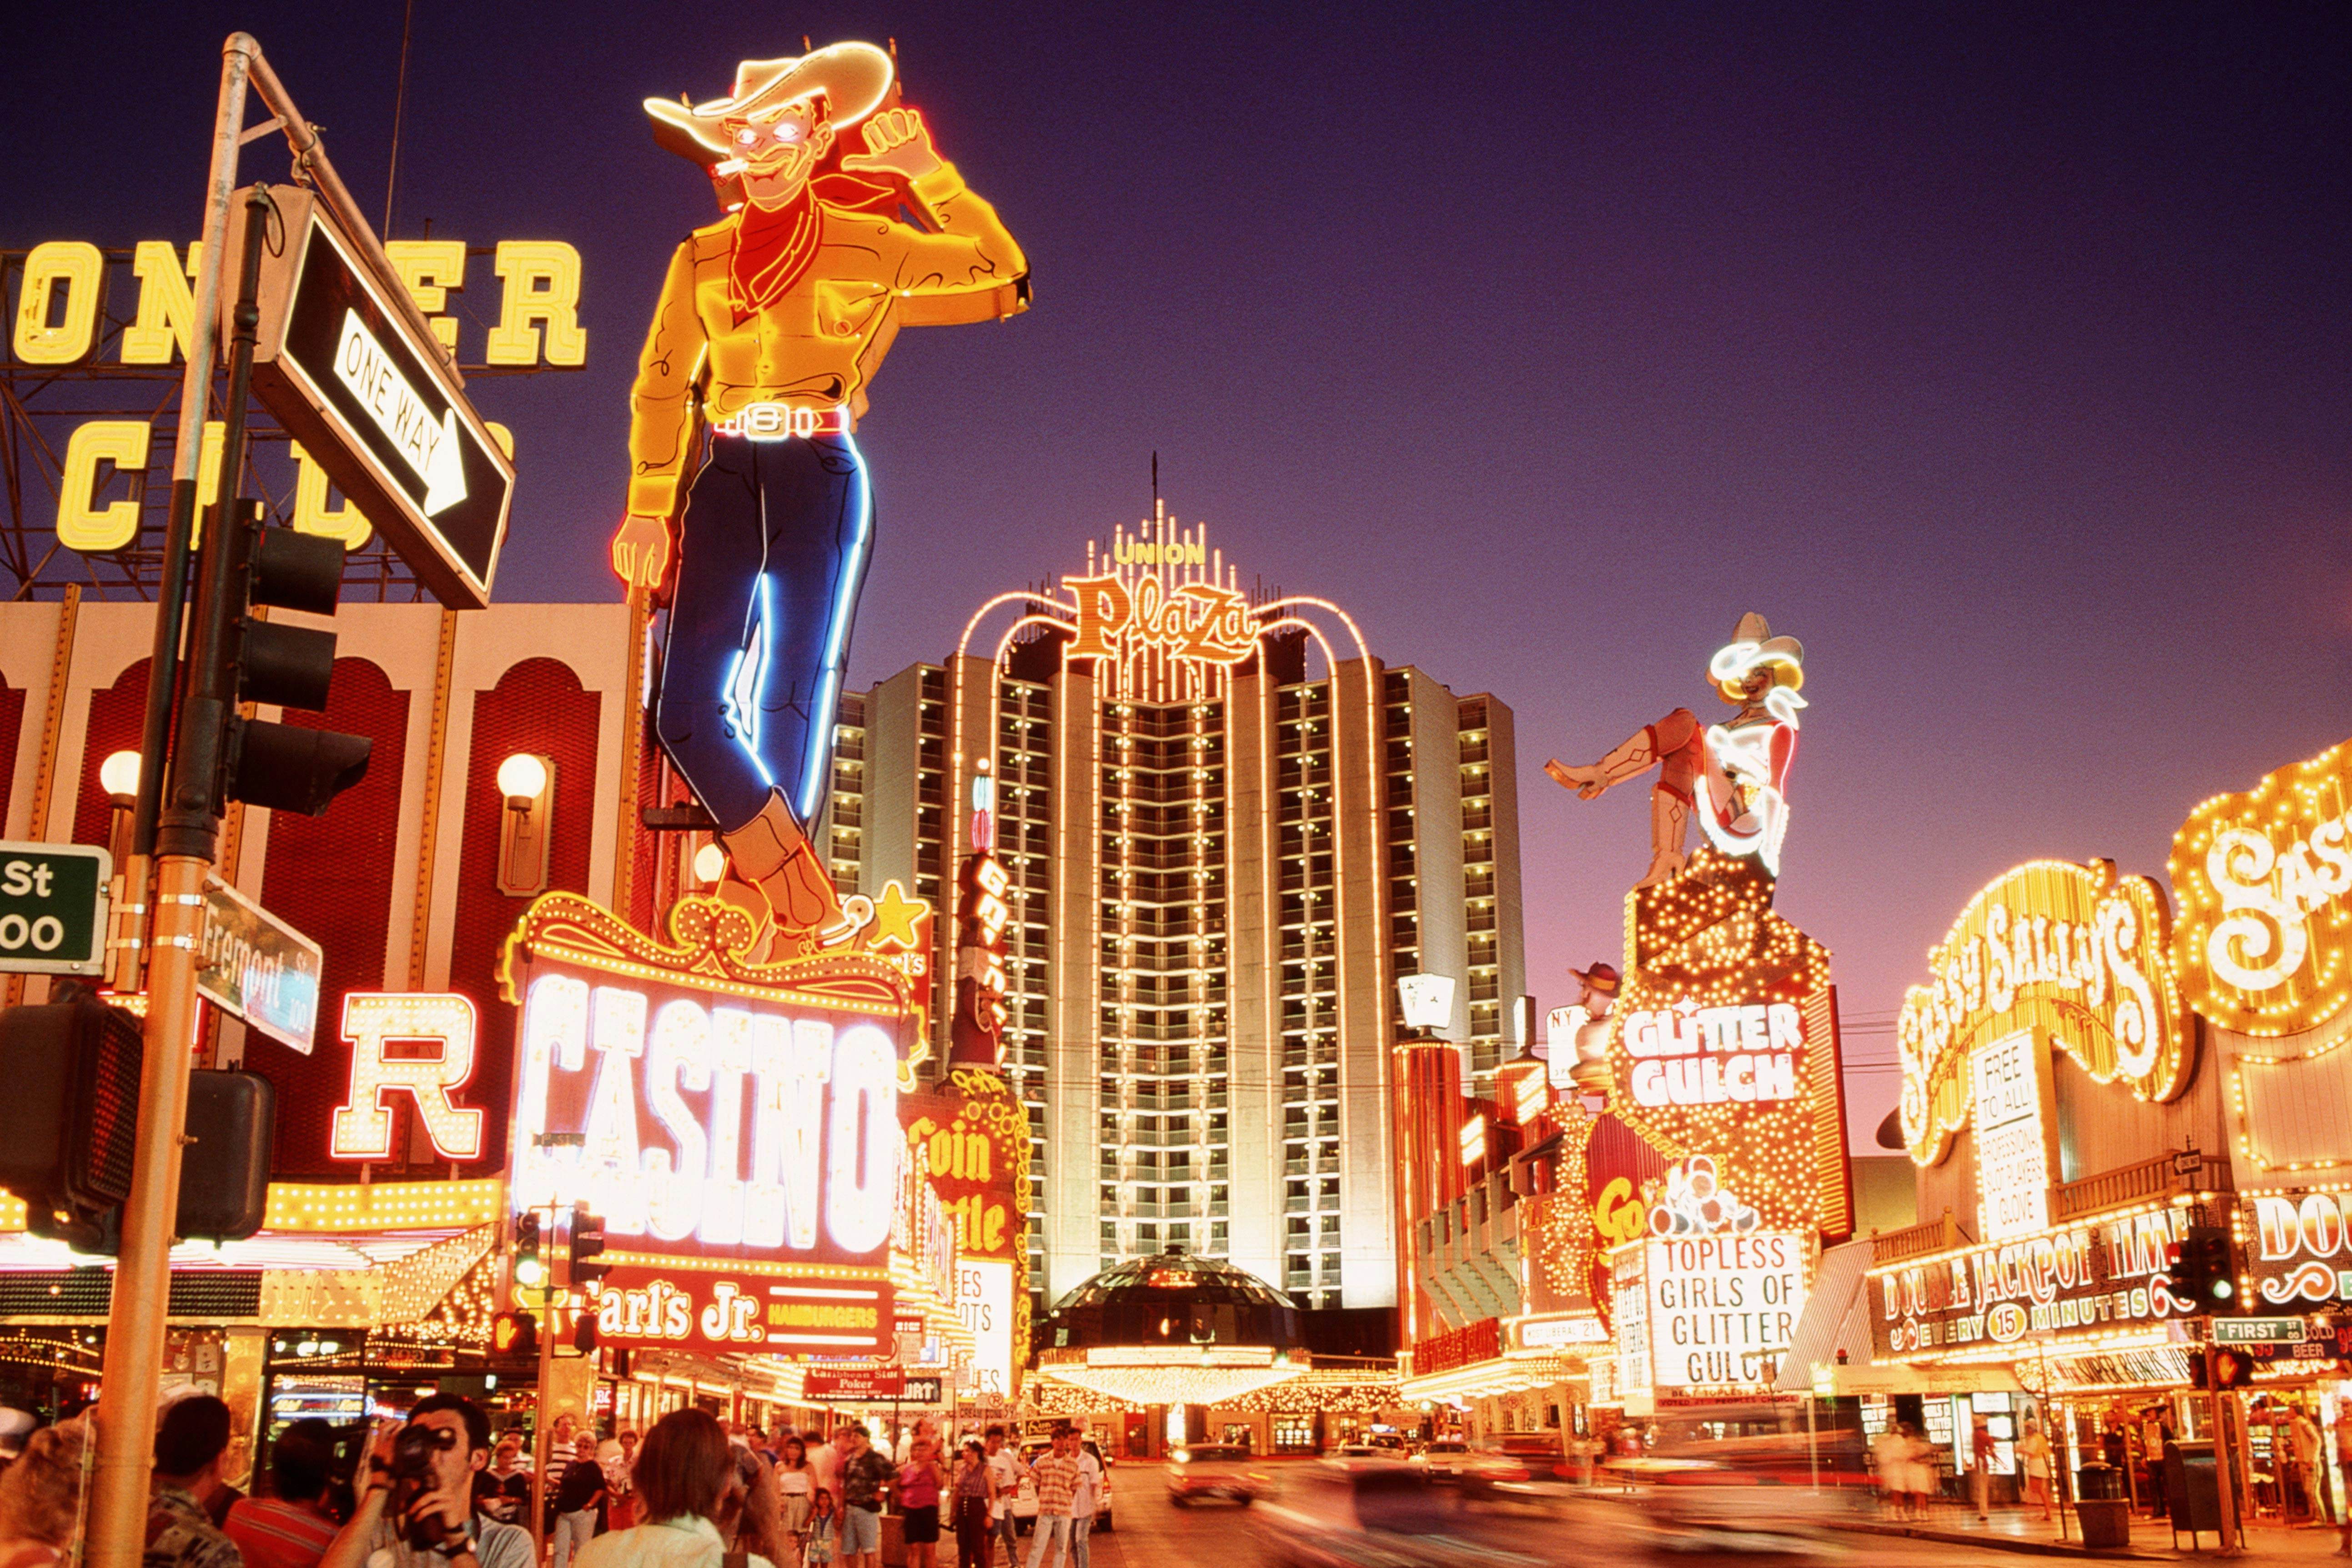 Las Vegas travel - Lonely Planet